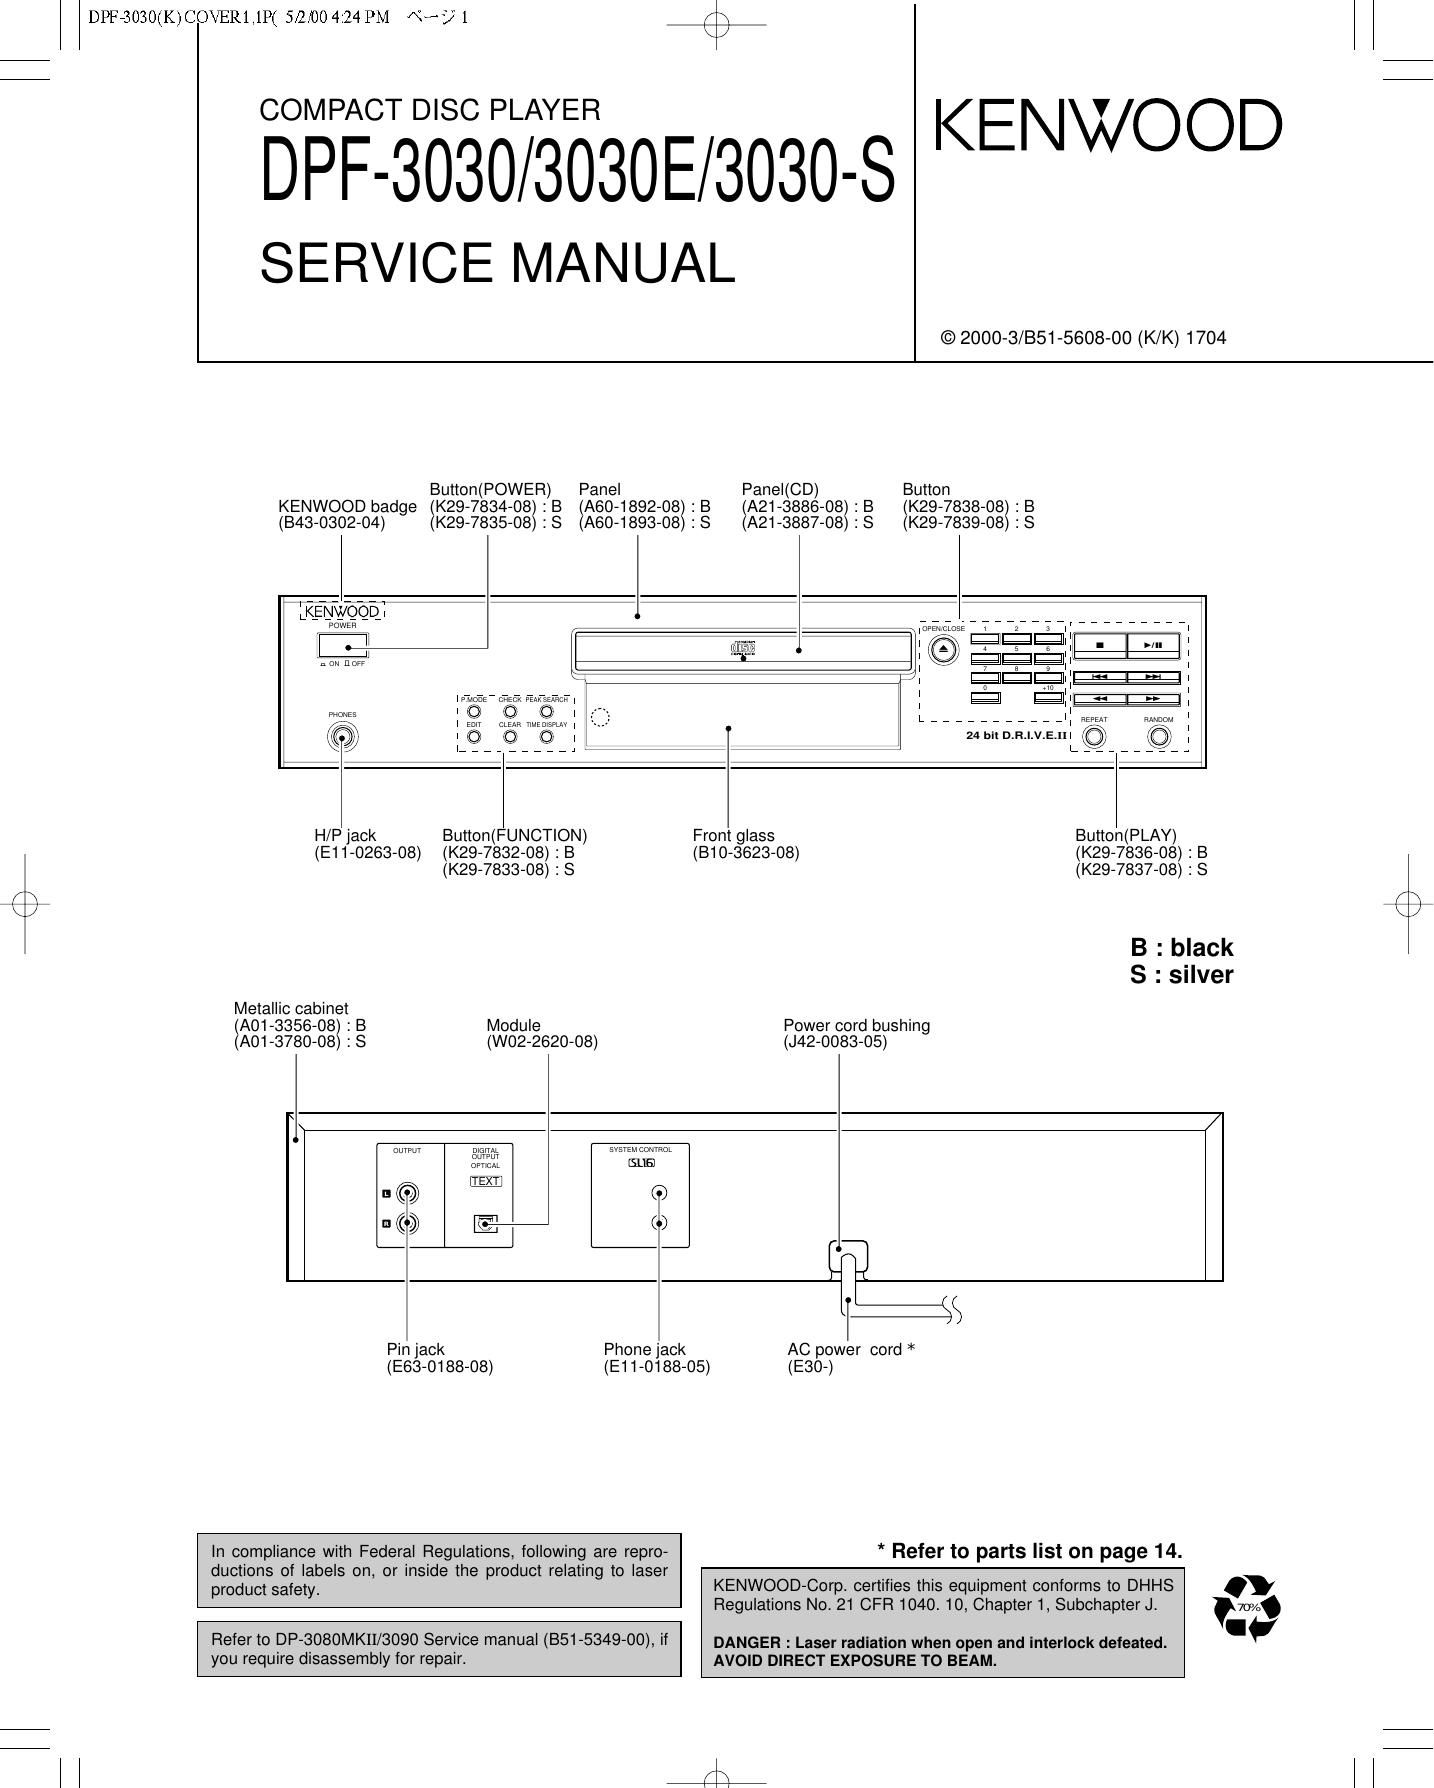 Kenwood DPF 3030 S Service Manual